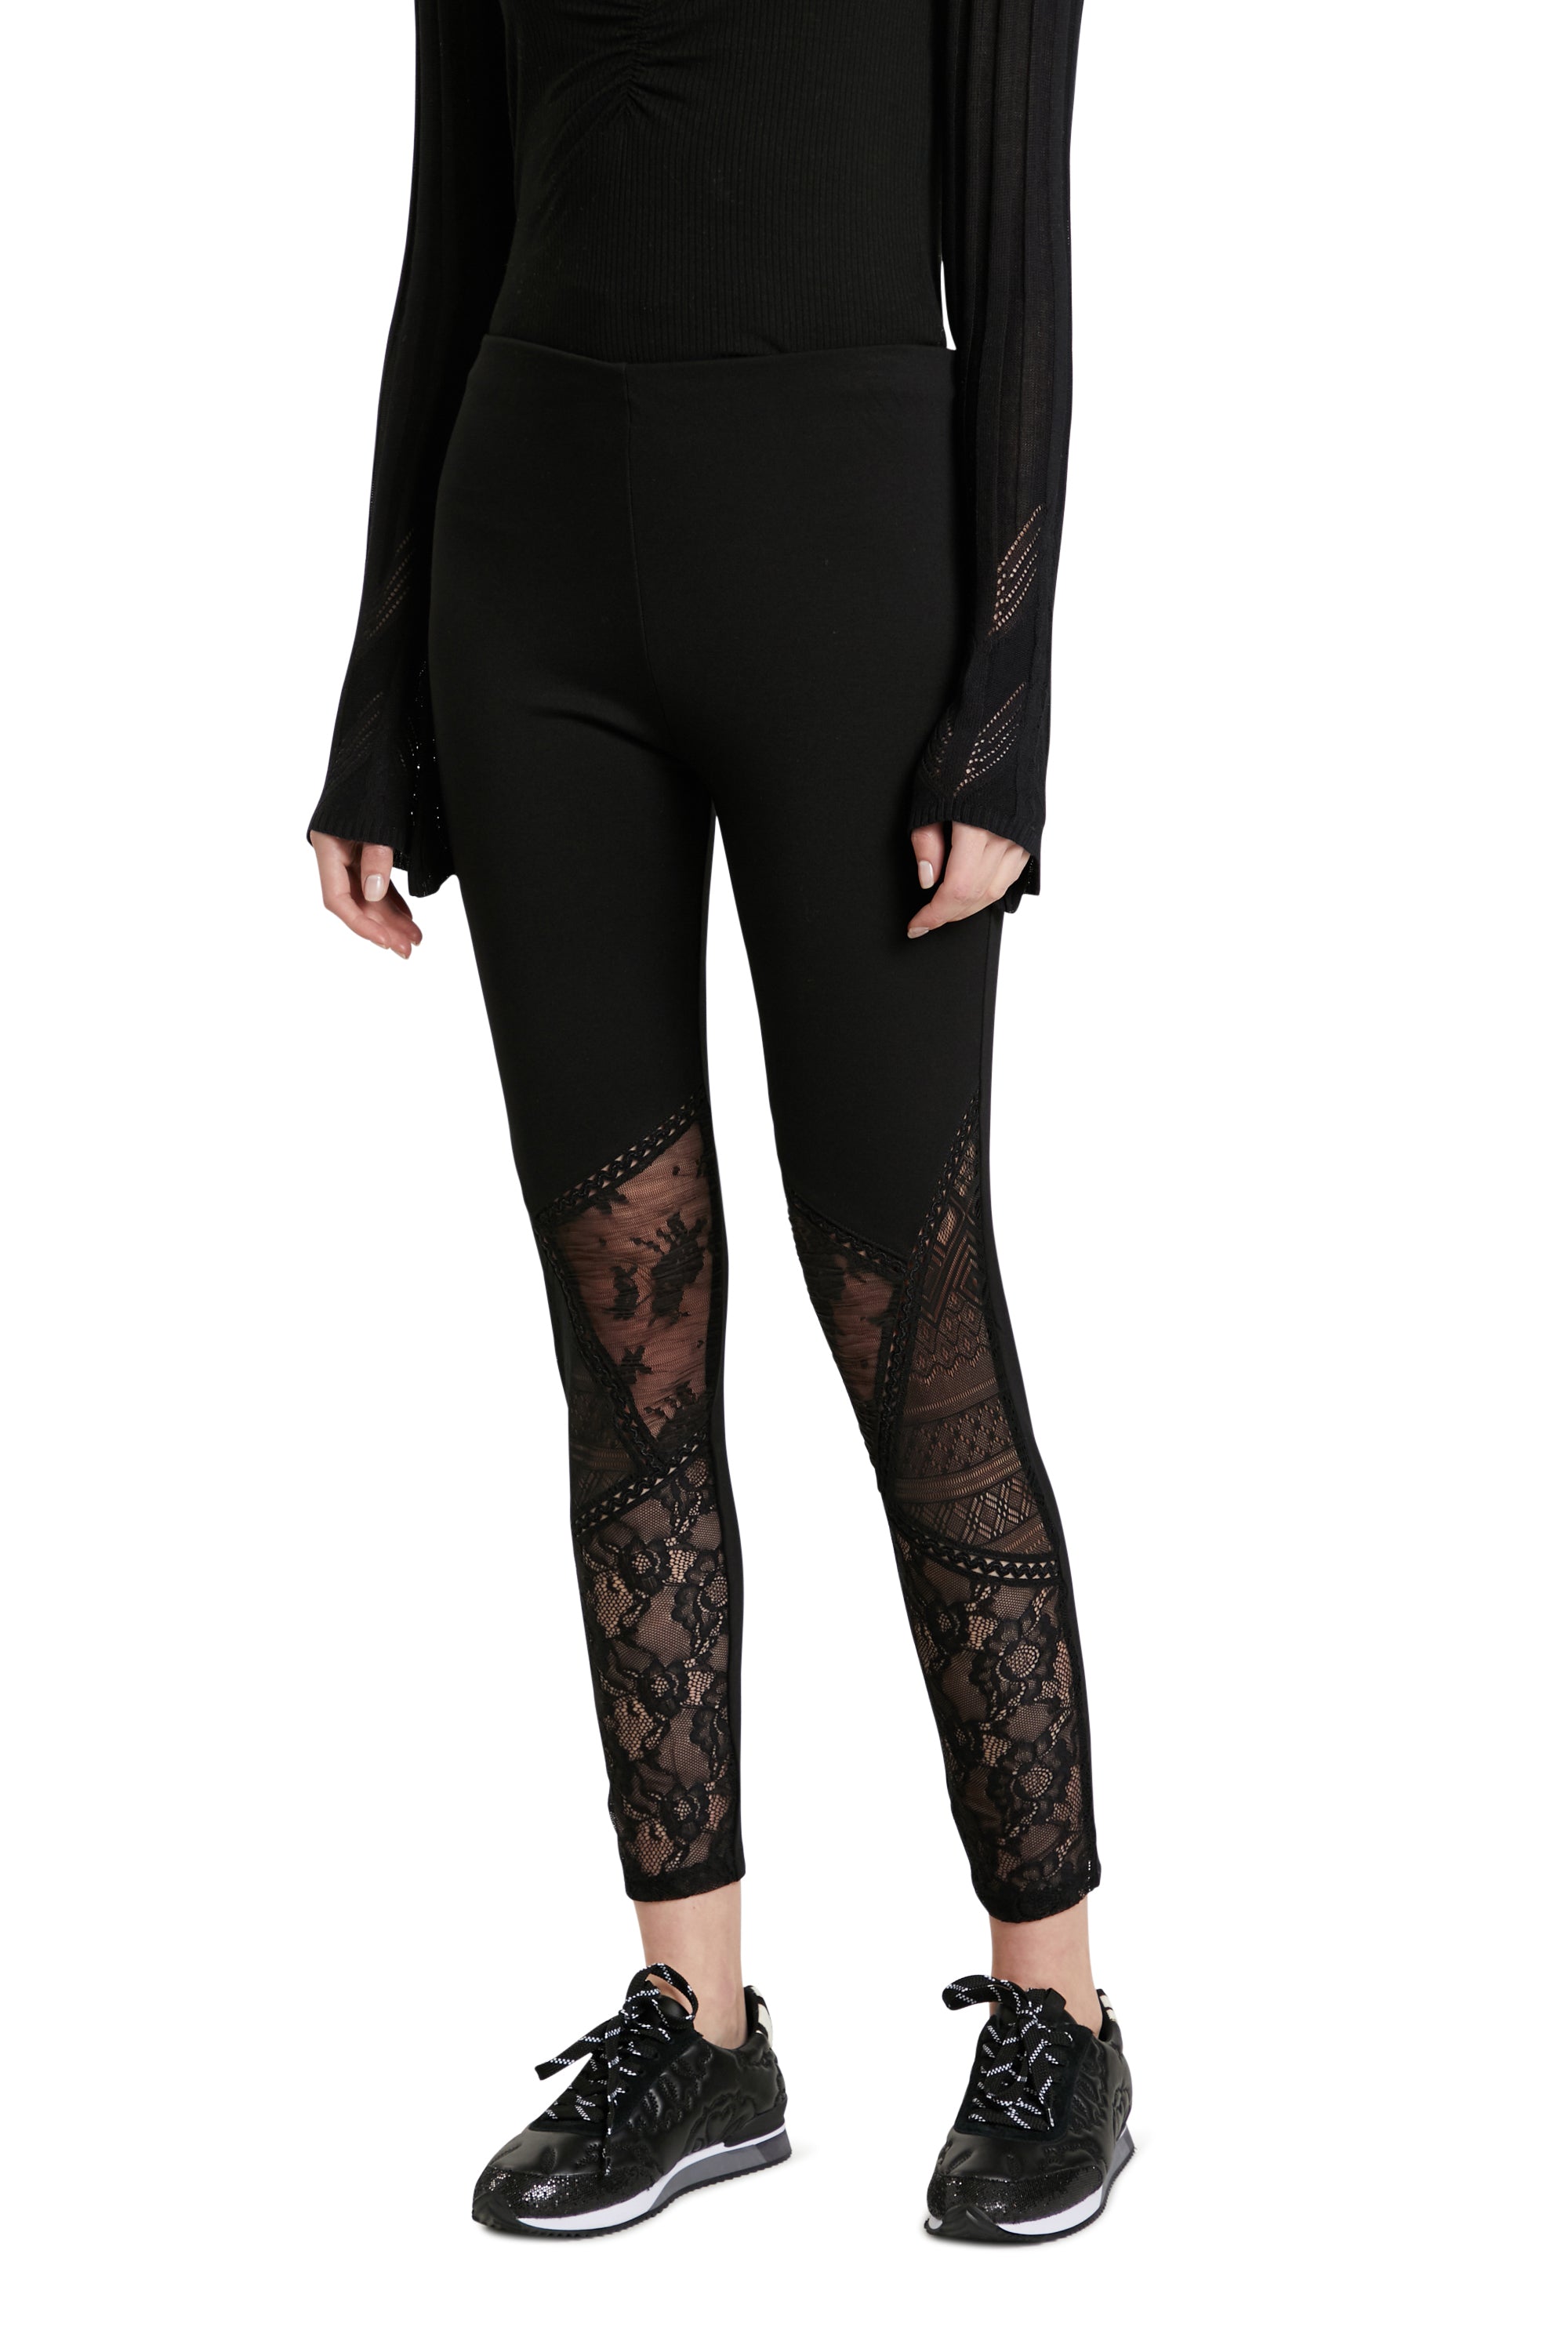 Varsovia Black Lace Bottom Leggings Desigual Style 21WWKK06